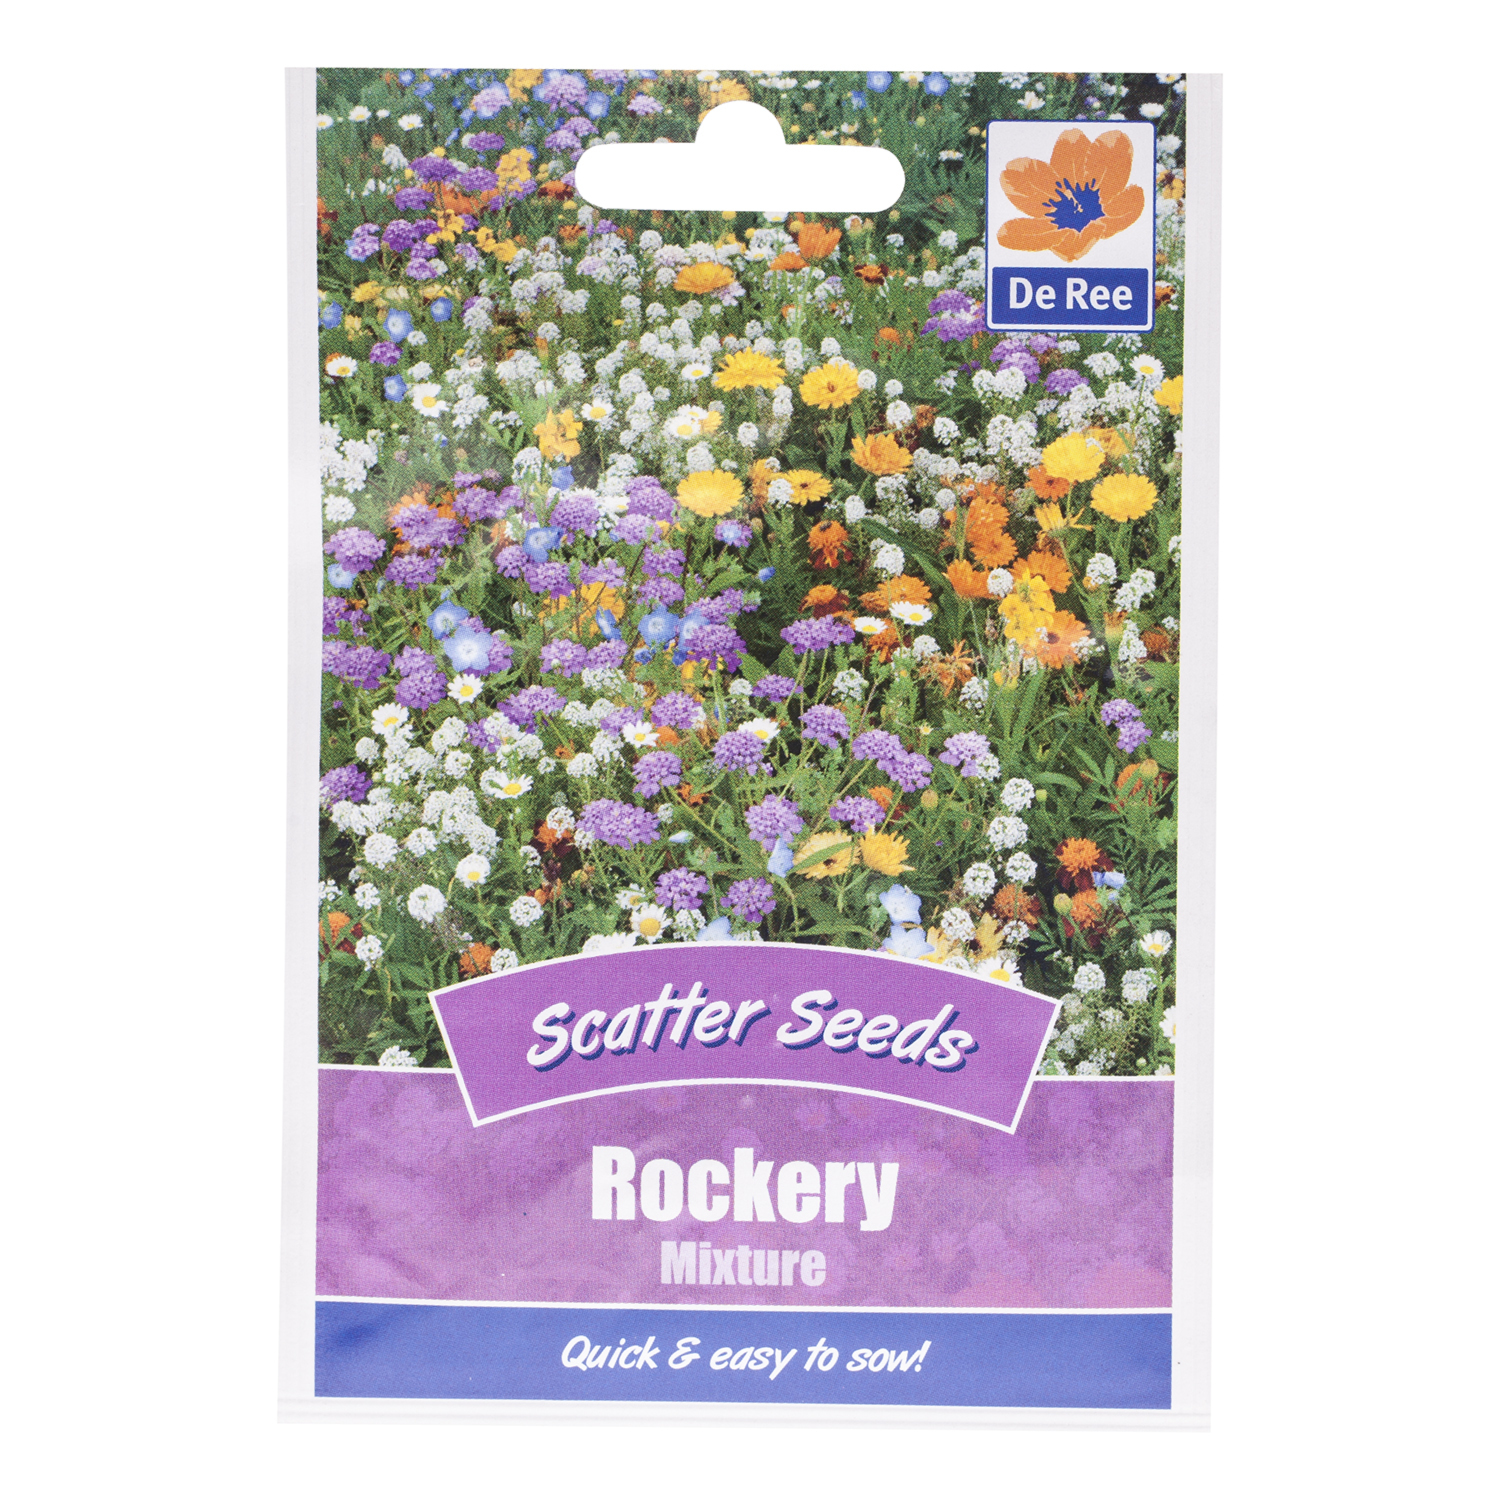 Scatter Seeds - Rockery Mixture Image